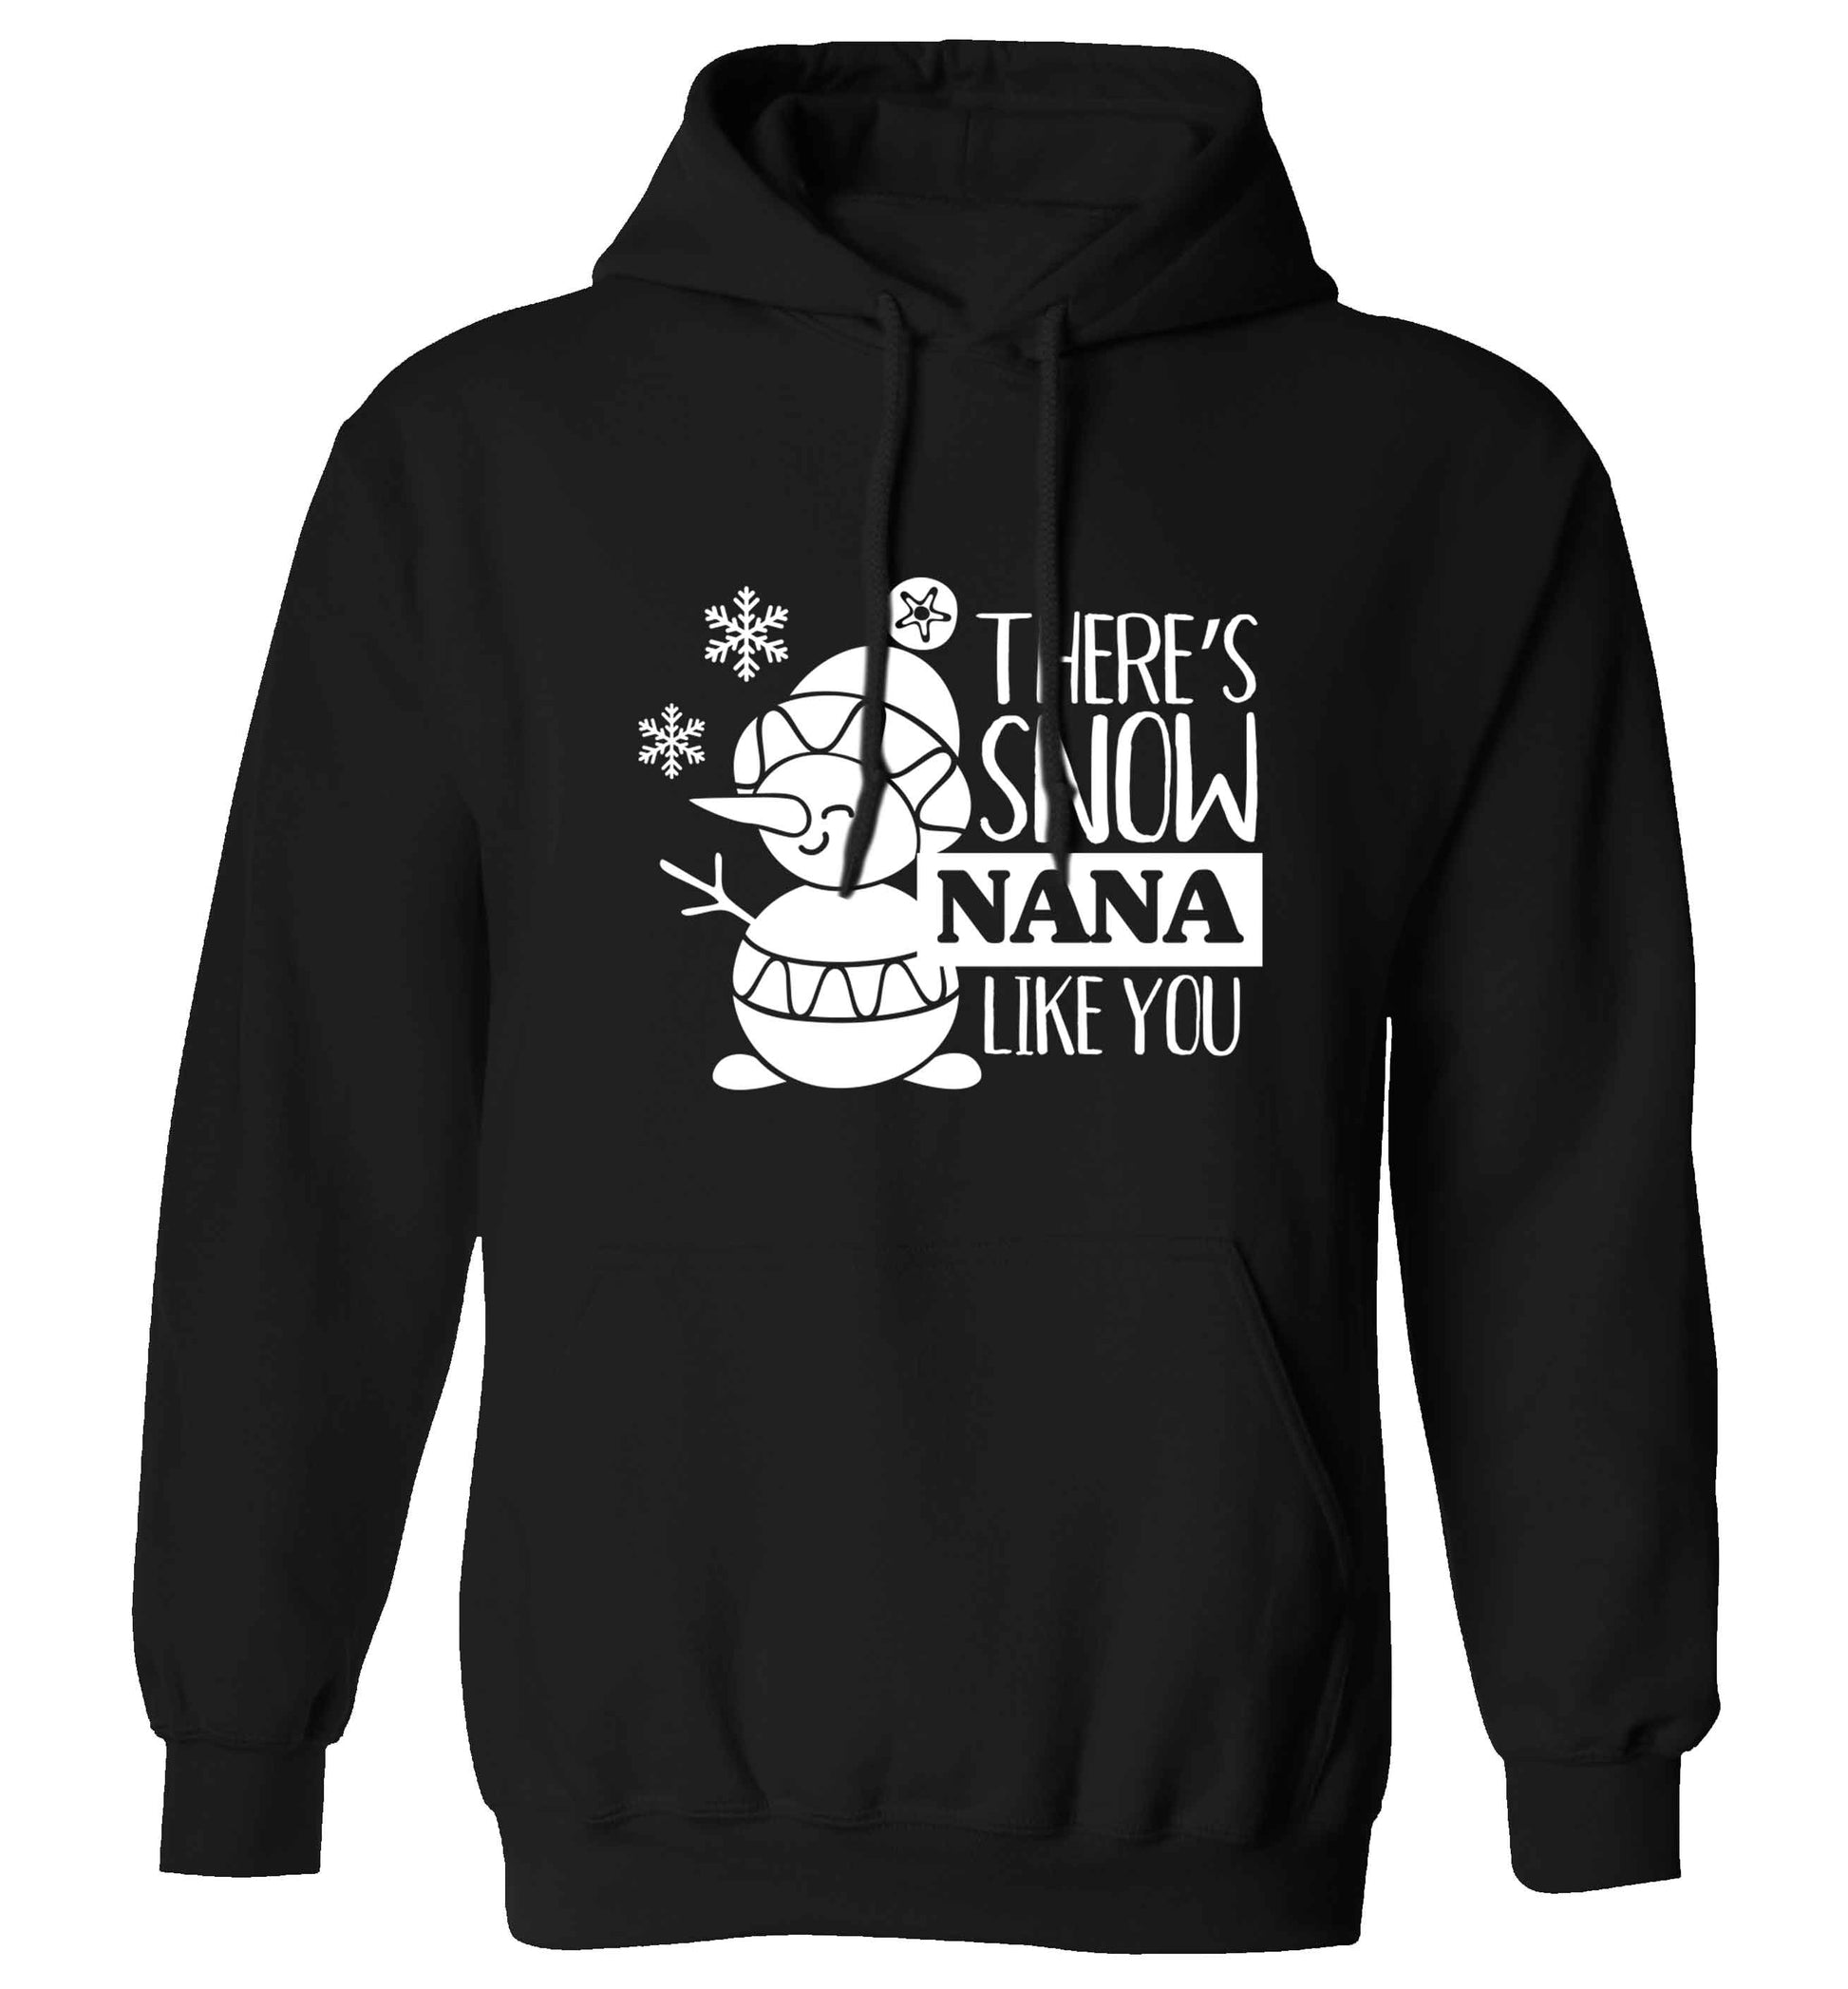 There's snow nana like you adults unisex black hoodie 2XL